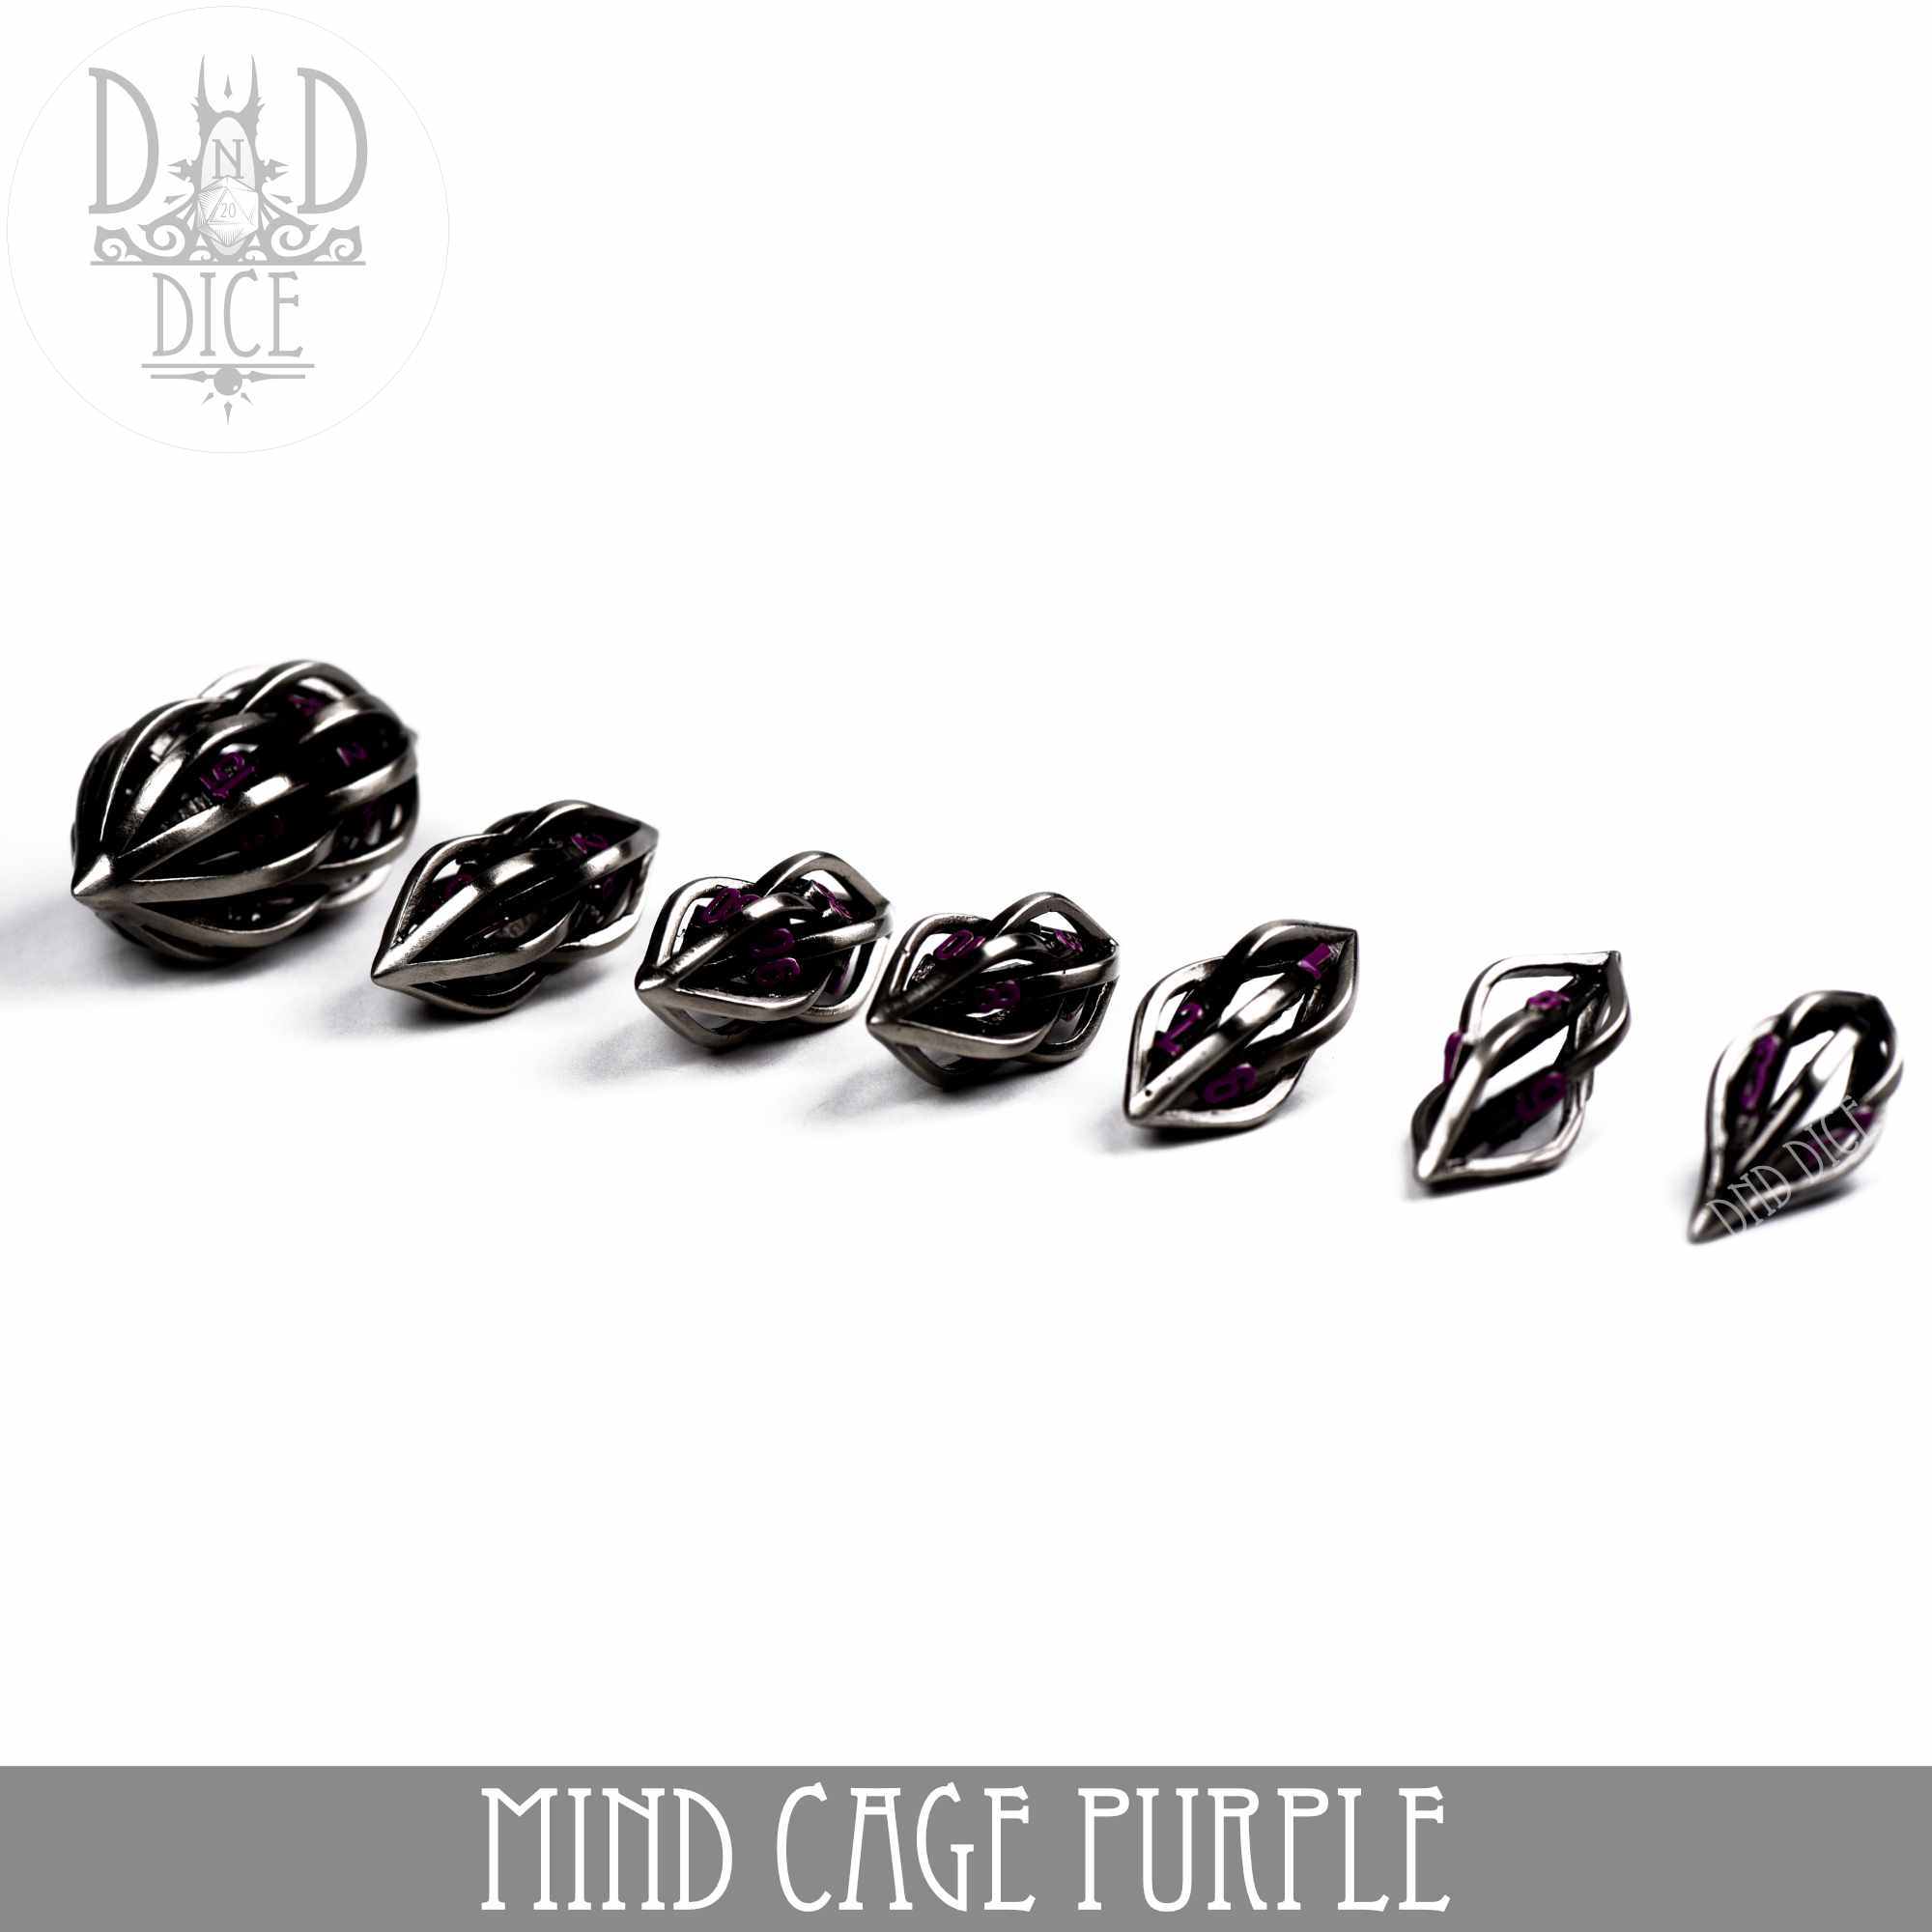 Mind Cage Purple - Metal Dice Set (Gift Box)